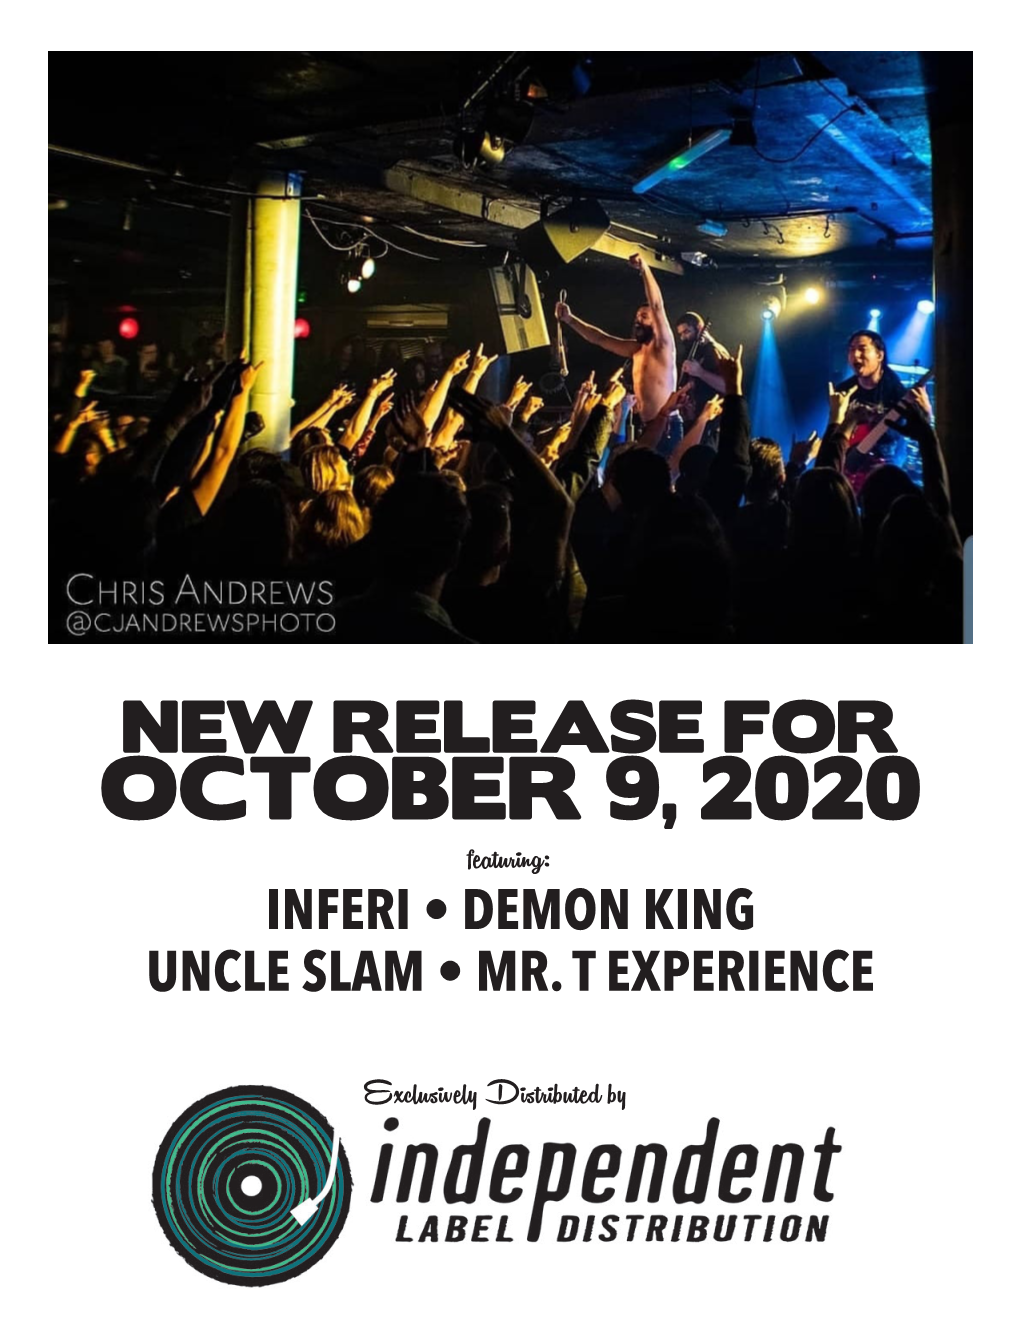 OCTOBER 9, 2020 Featuring: INFERI • DEMON KING UNCLE SLAM • MR